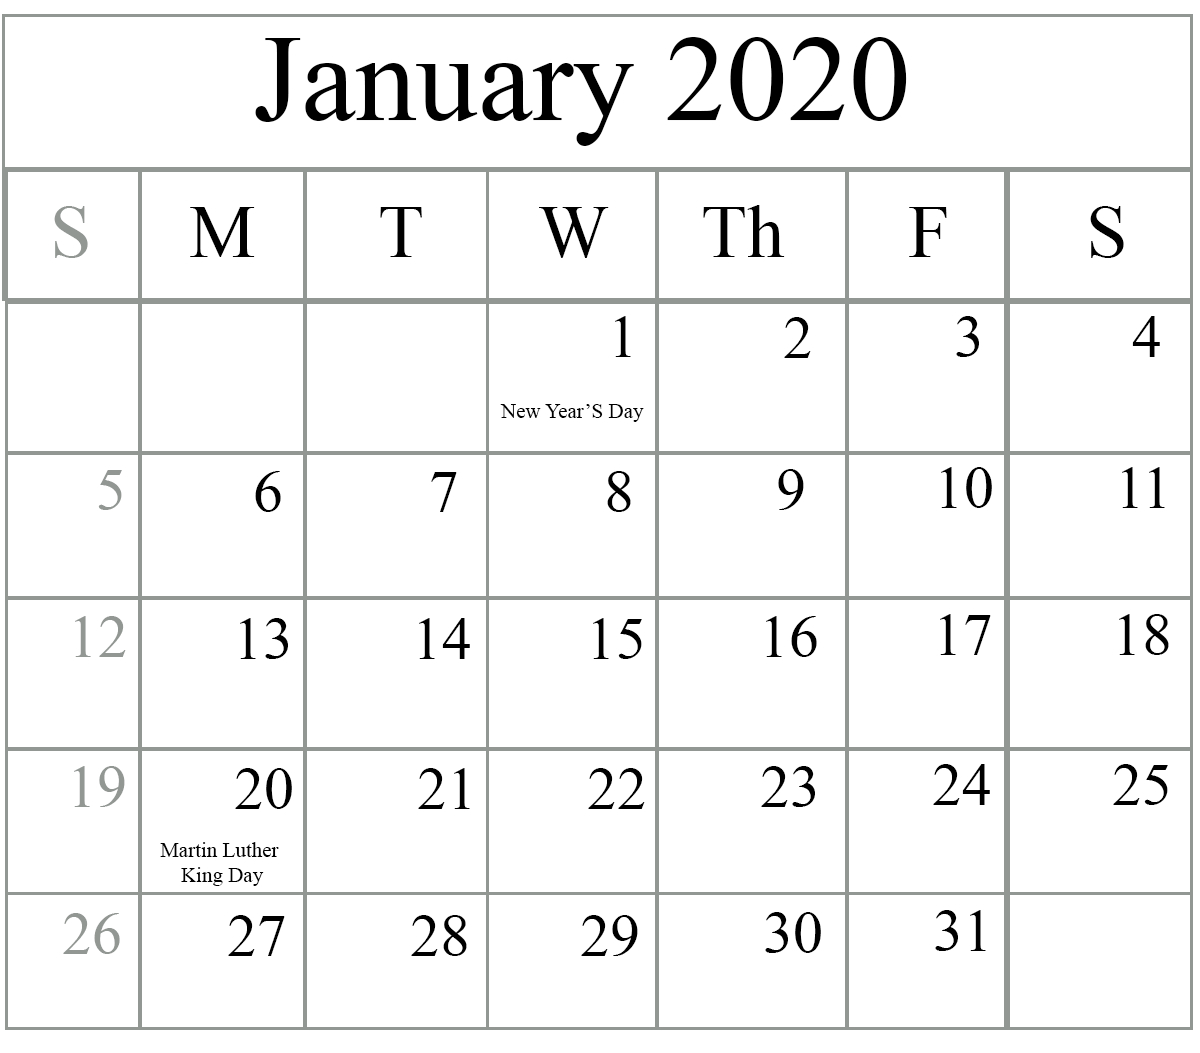 January 2020 Calendar Excel | Free Printable Calendar